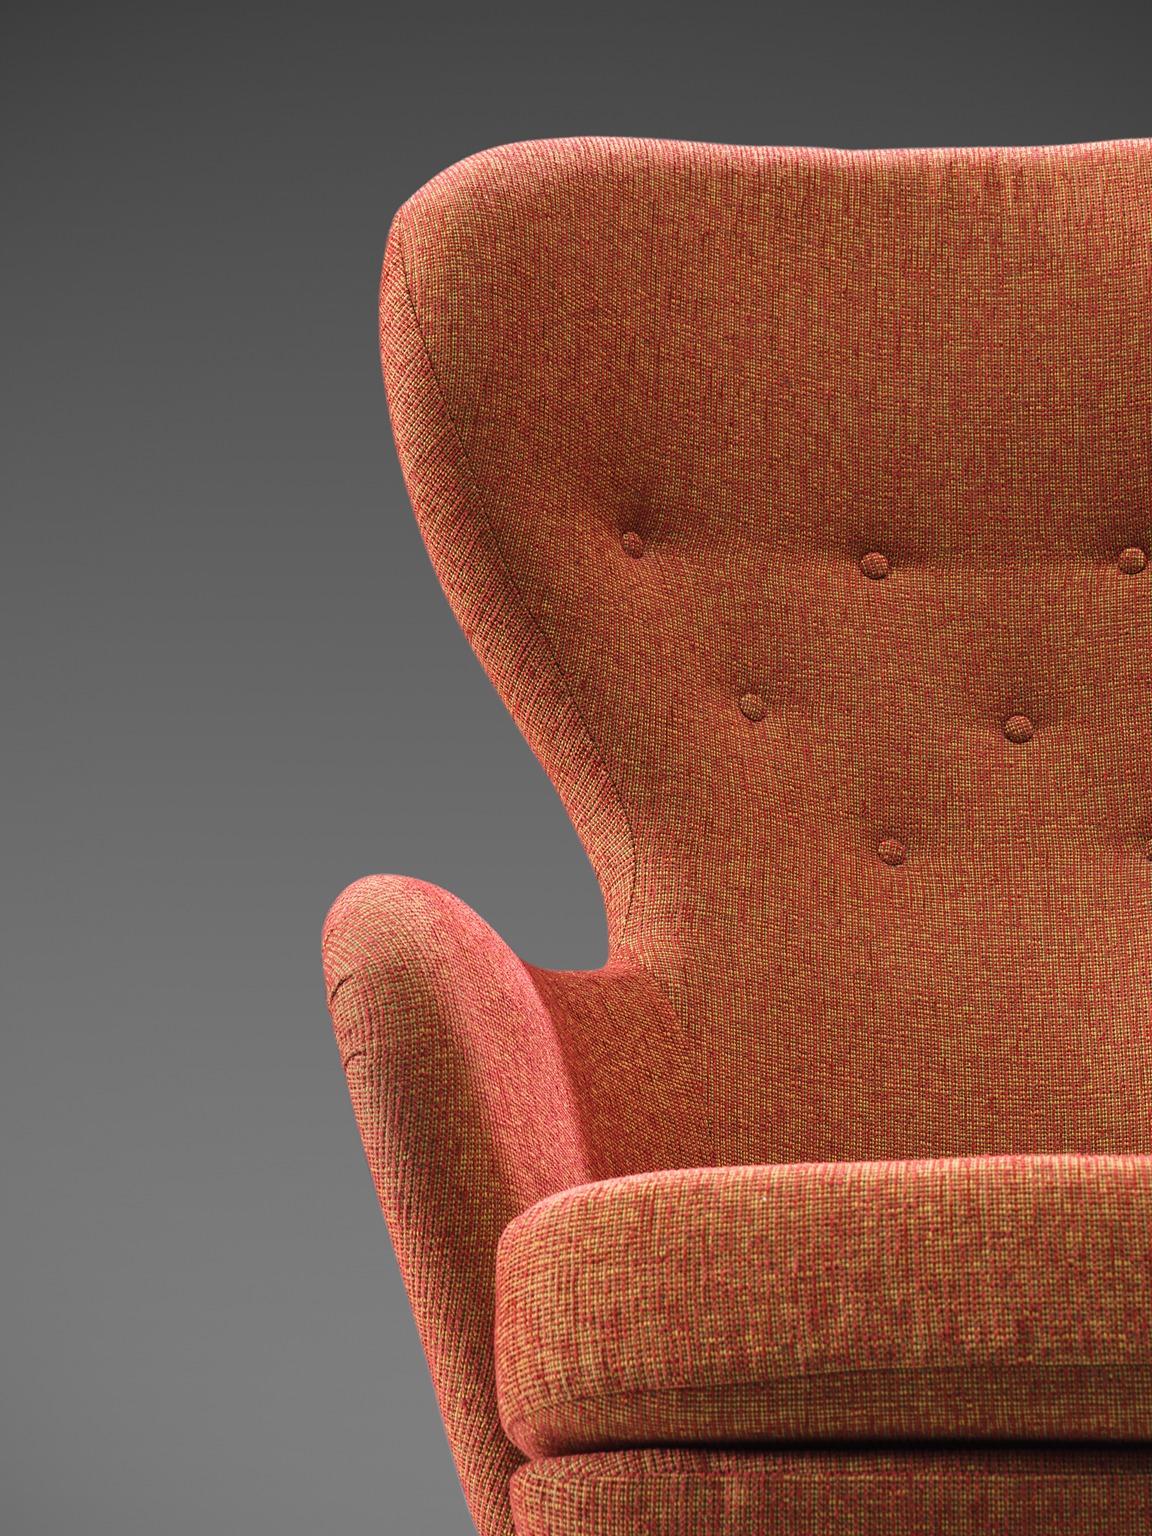 Mid-20th Century Carl Gustaf Hiort 'Siesta' Lounge Chair